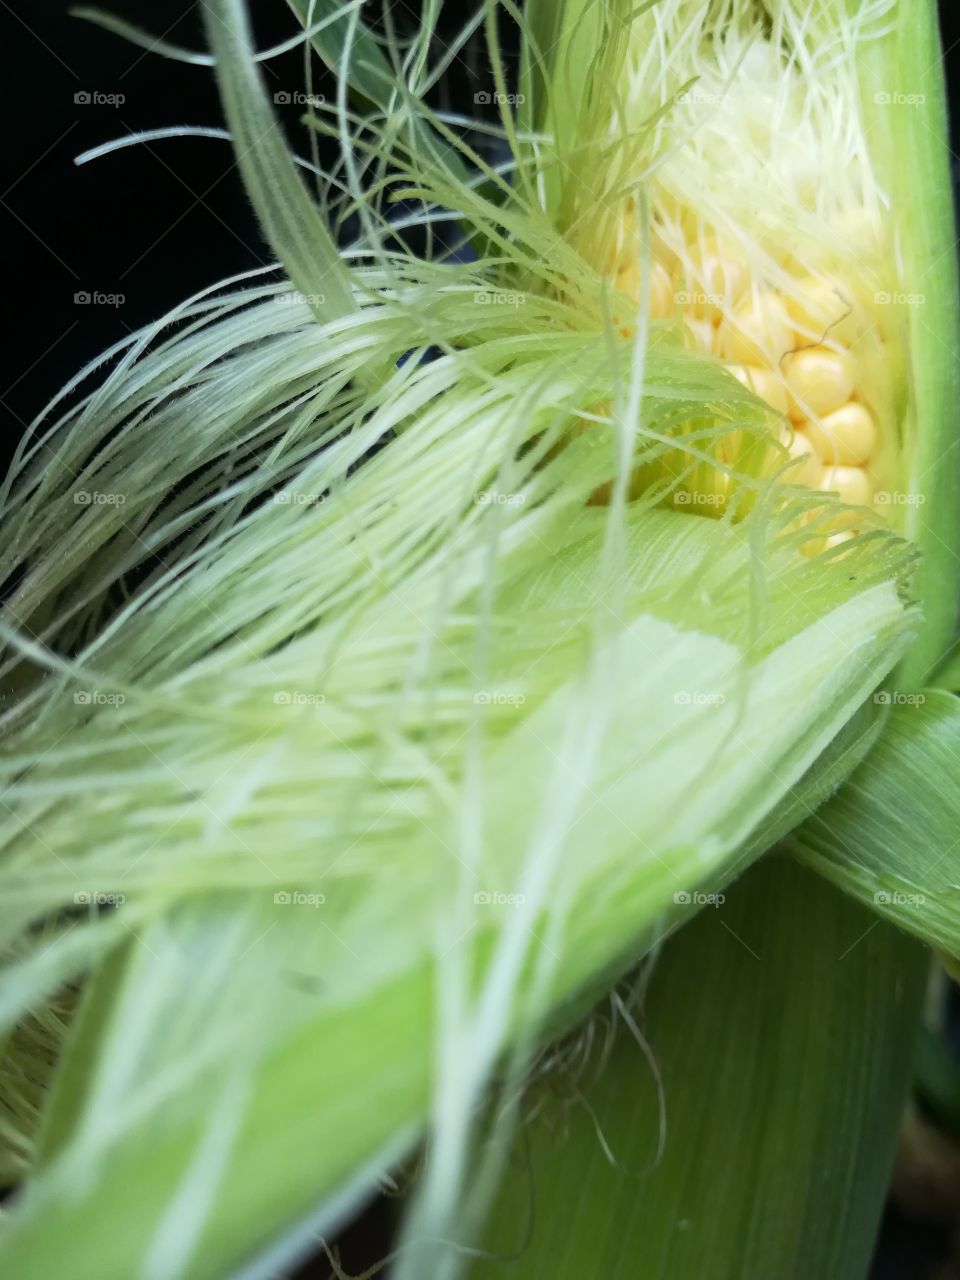 Field fresh corn